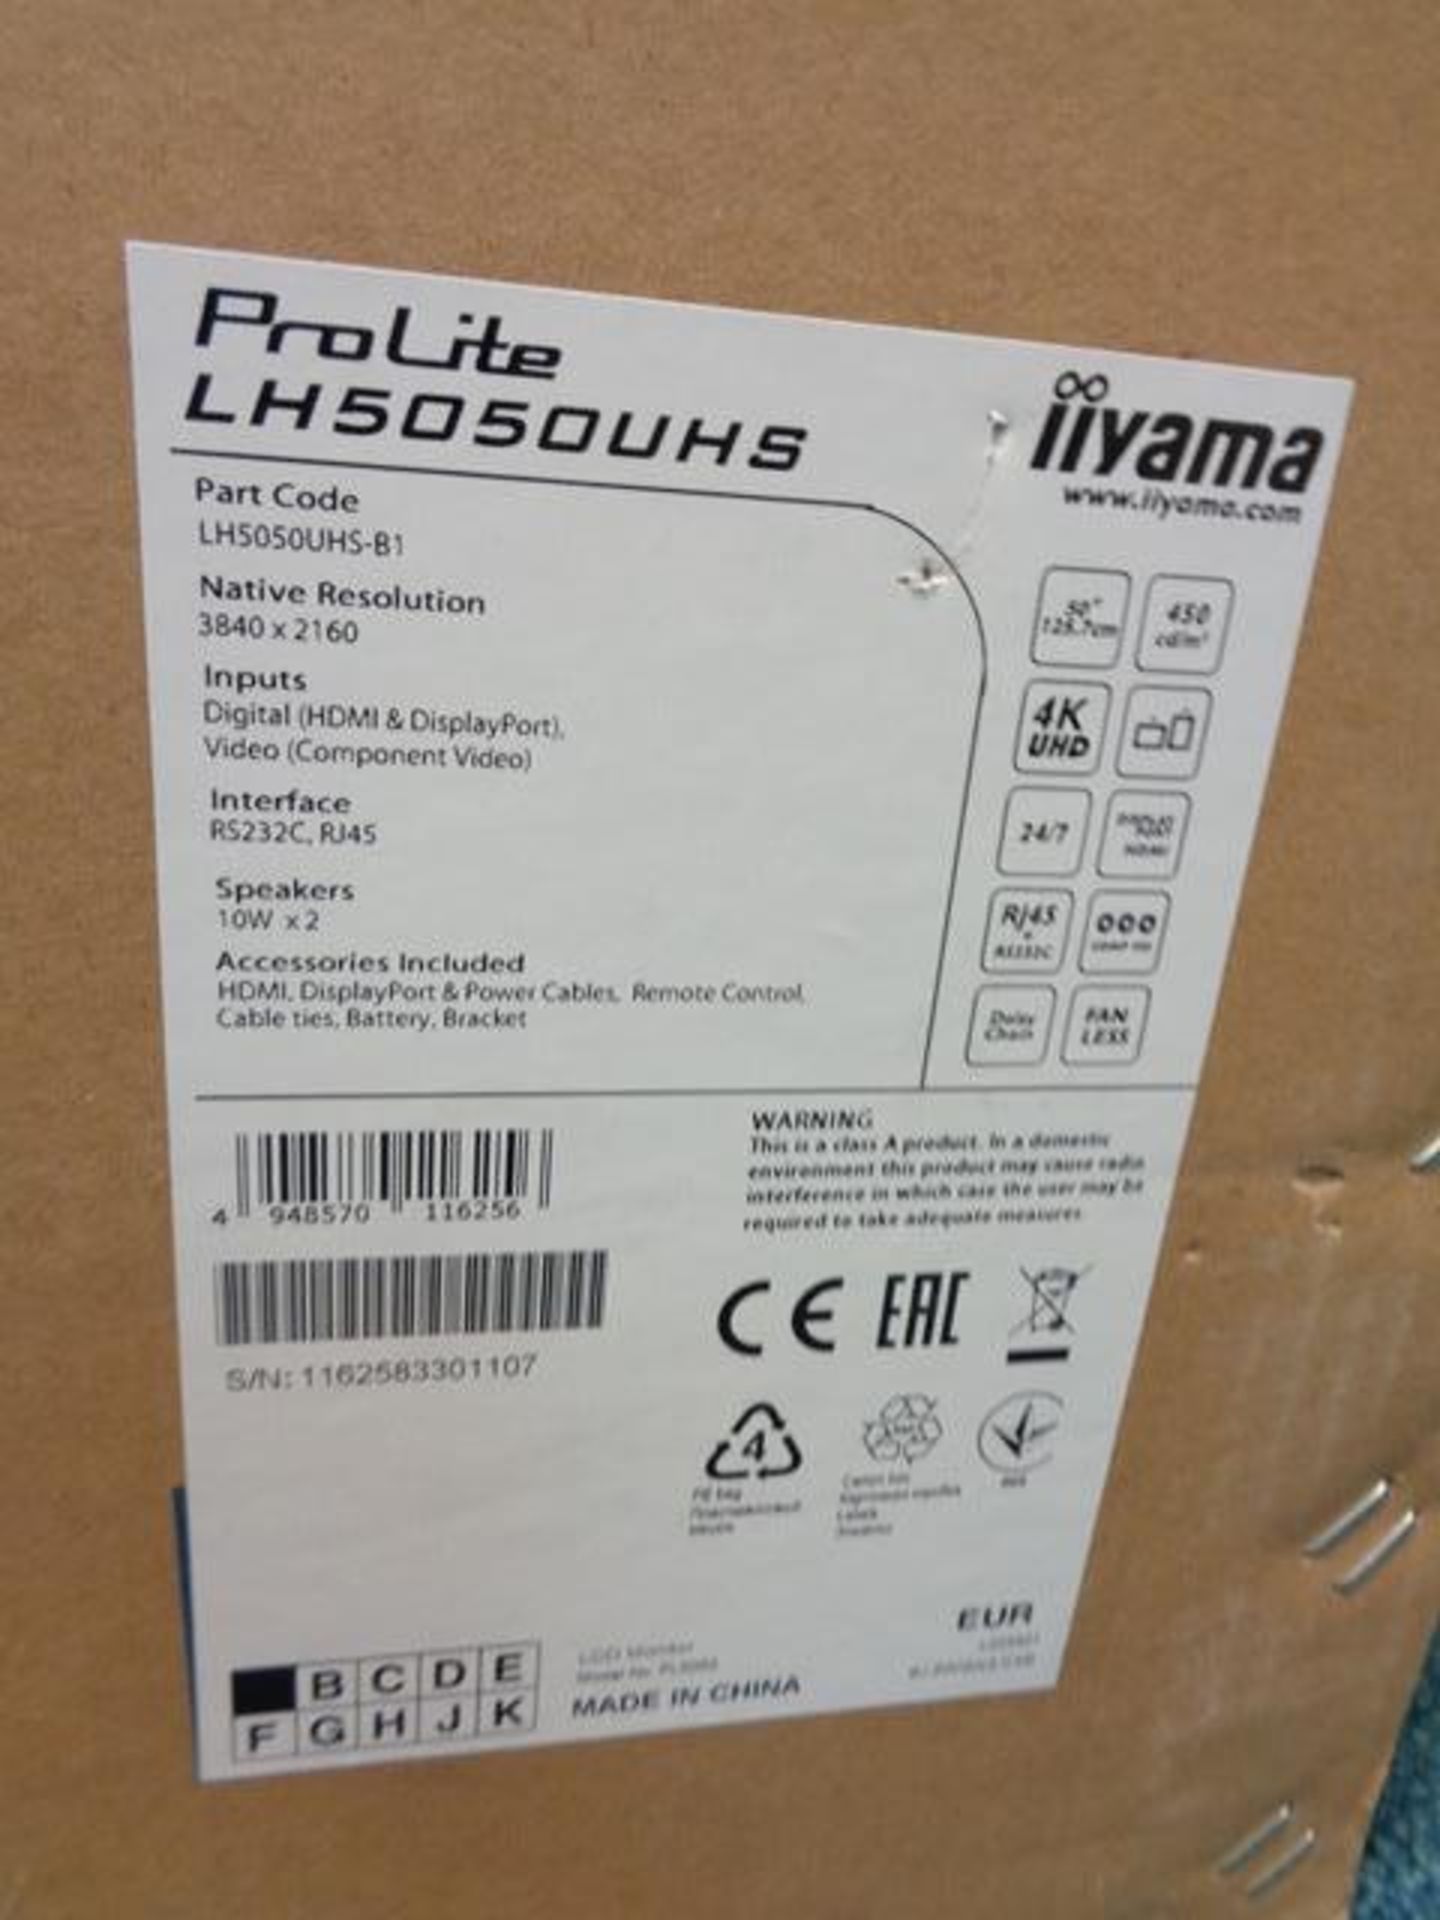 II Yama Prolite LH5050UHS 50" 4K UHP monitor - Image 2 of 2